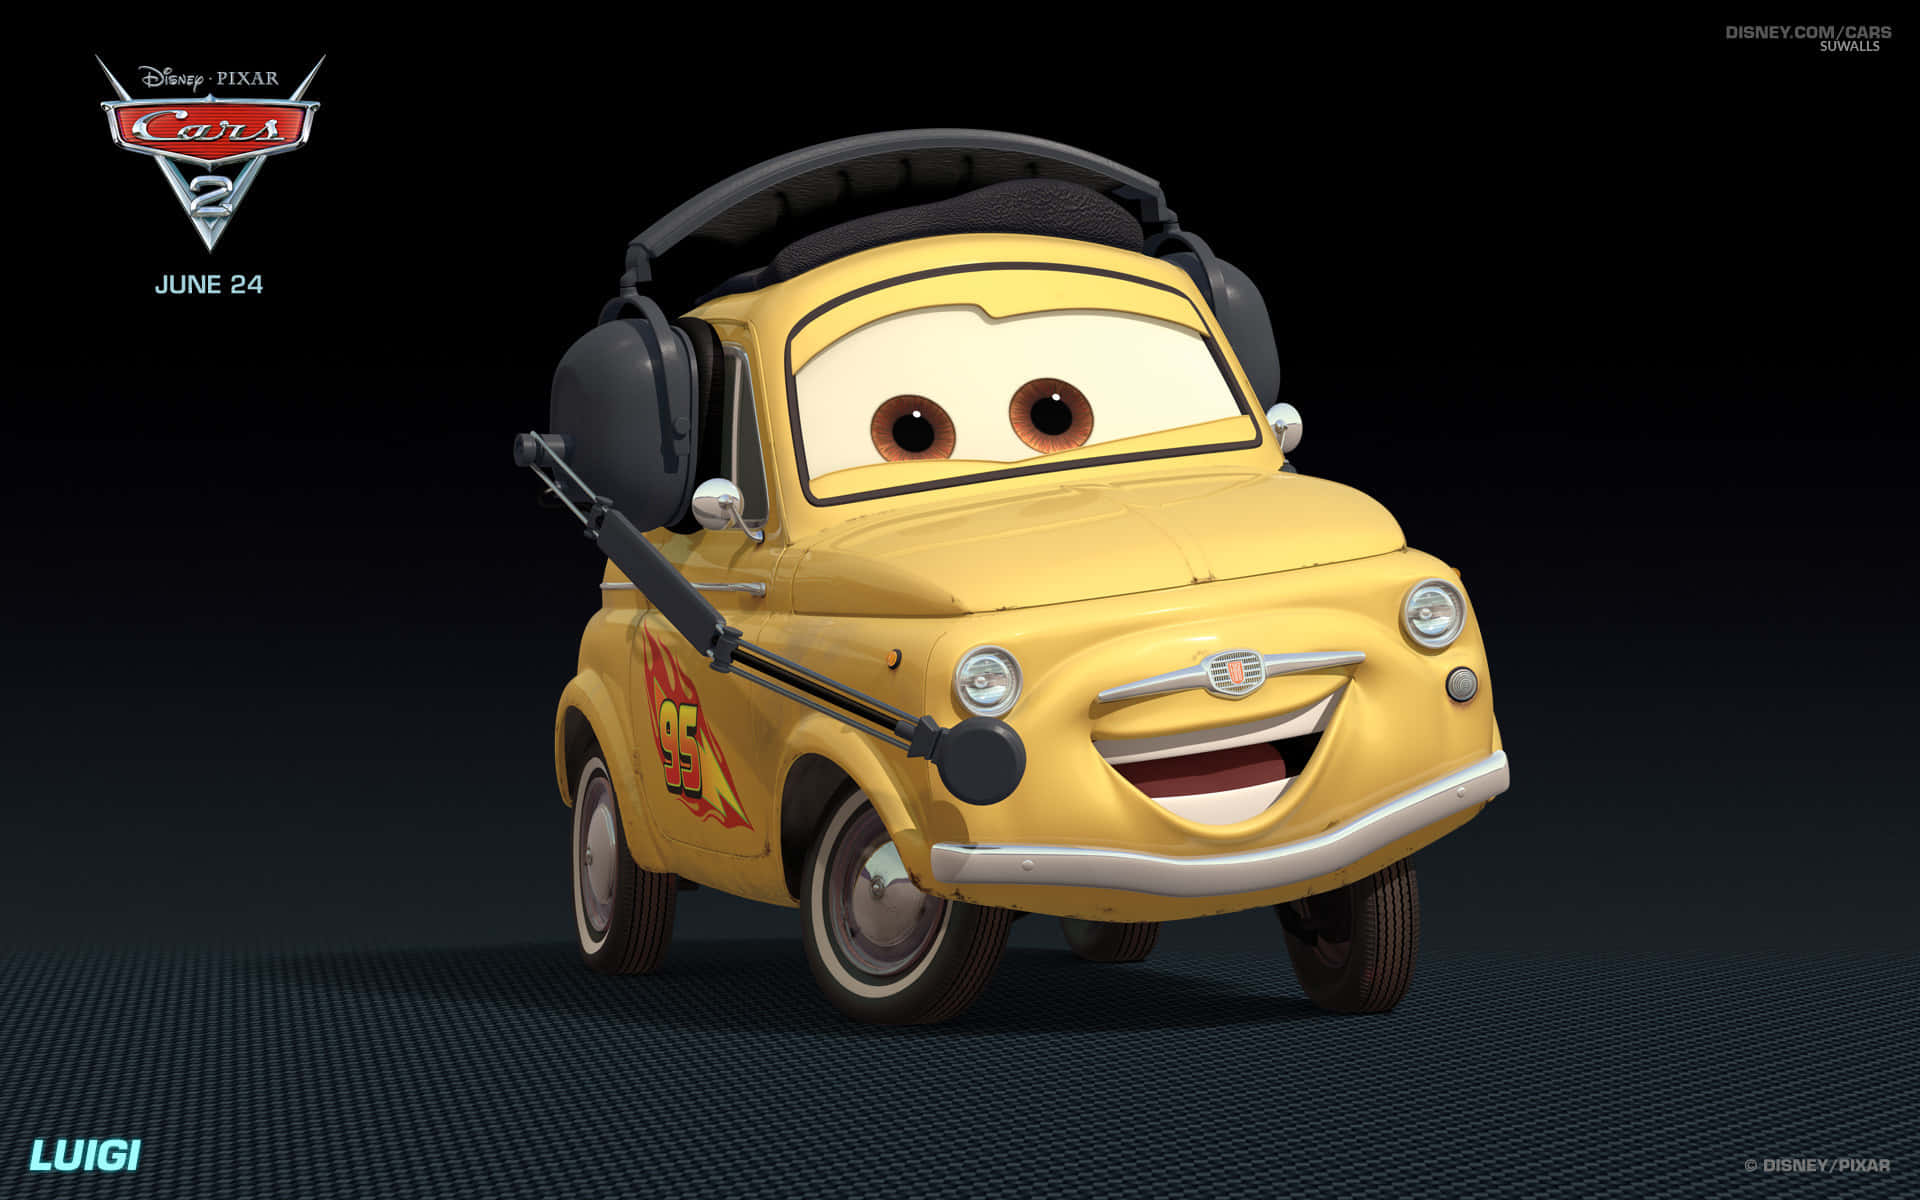 A Cartoon Car With Headphones And A Smile